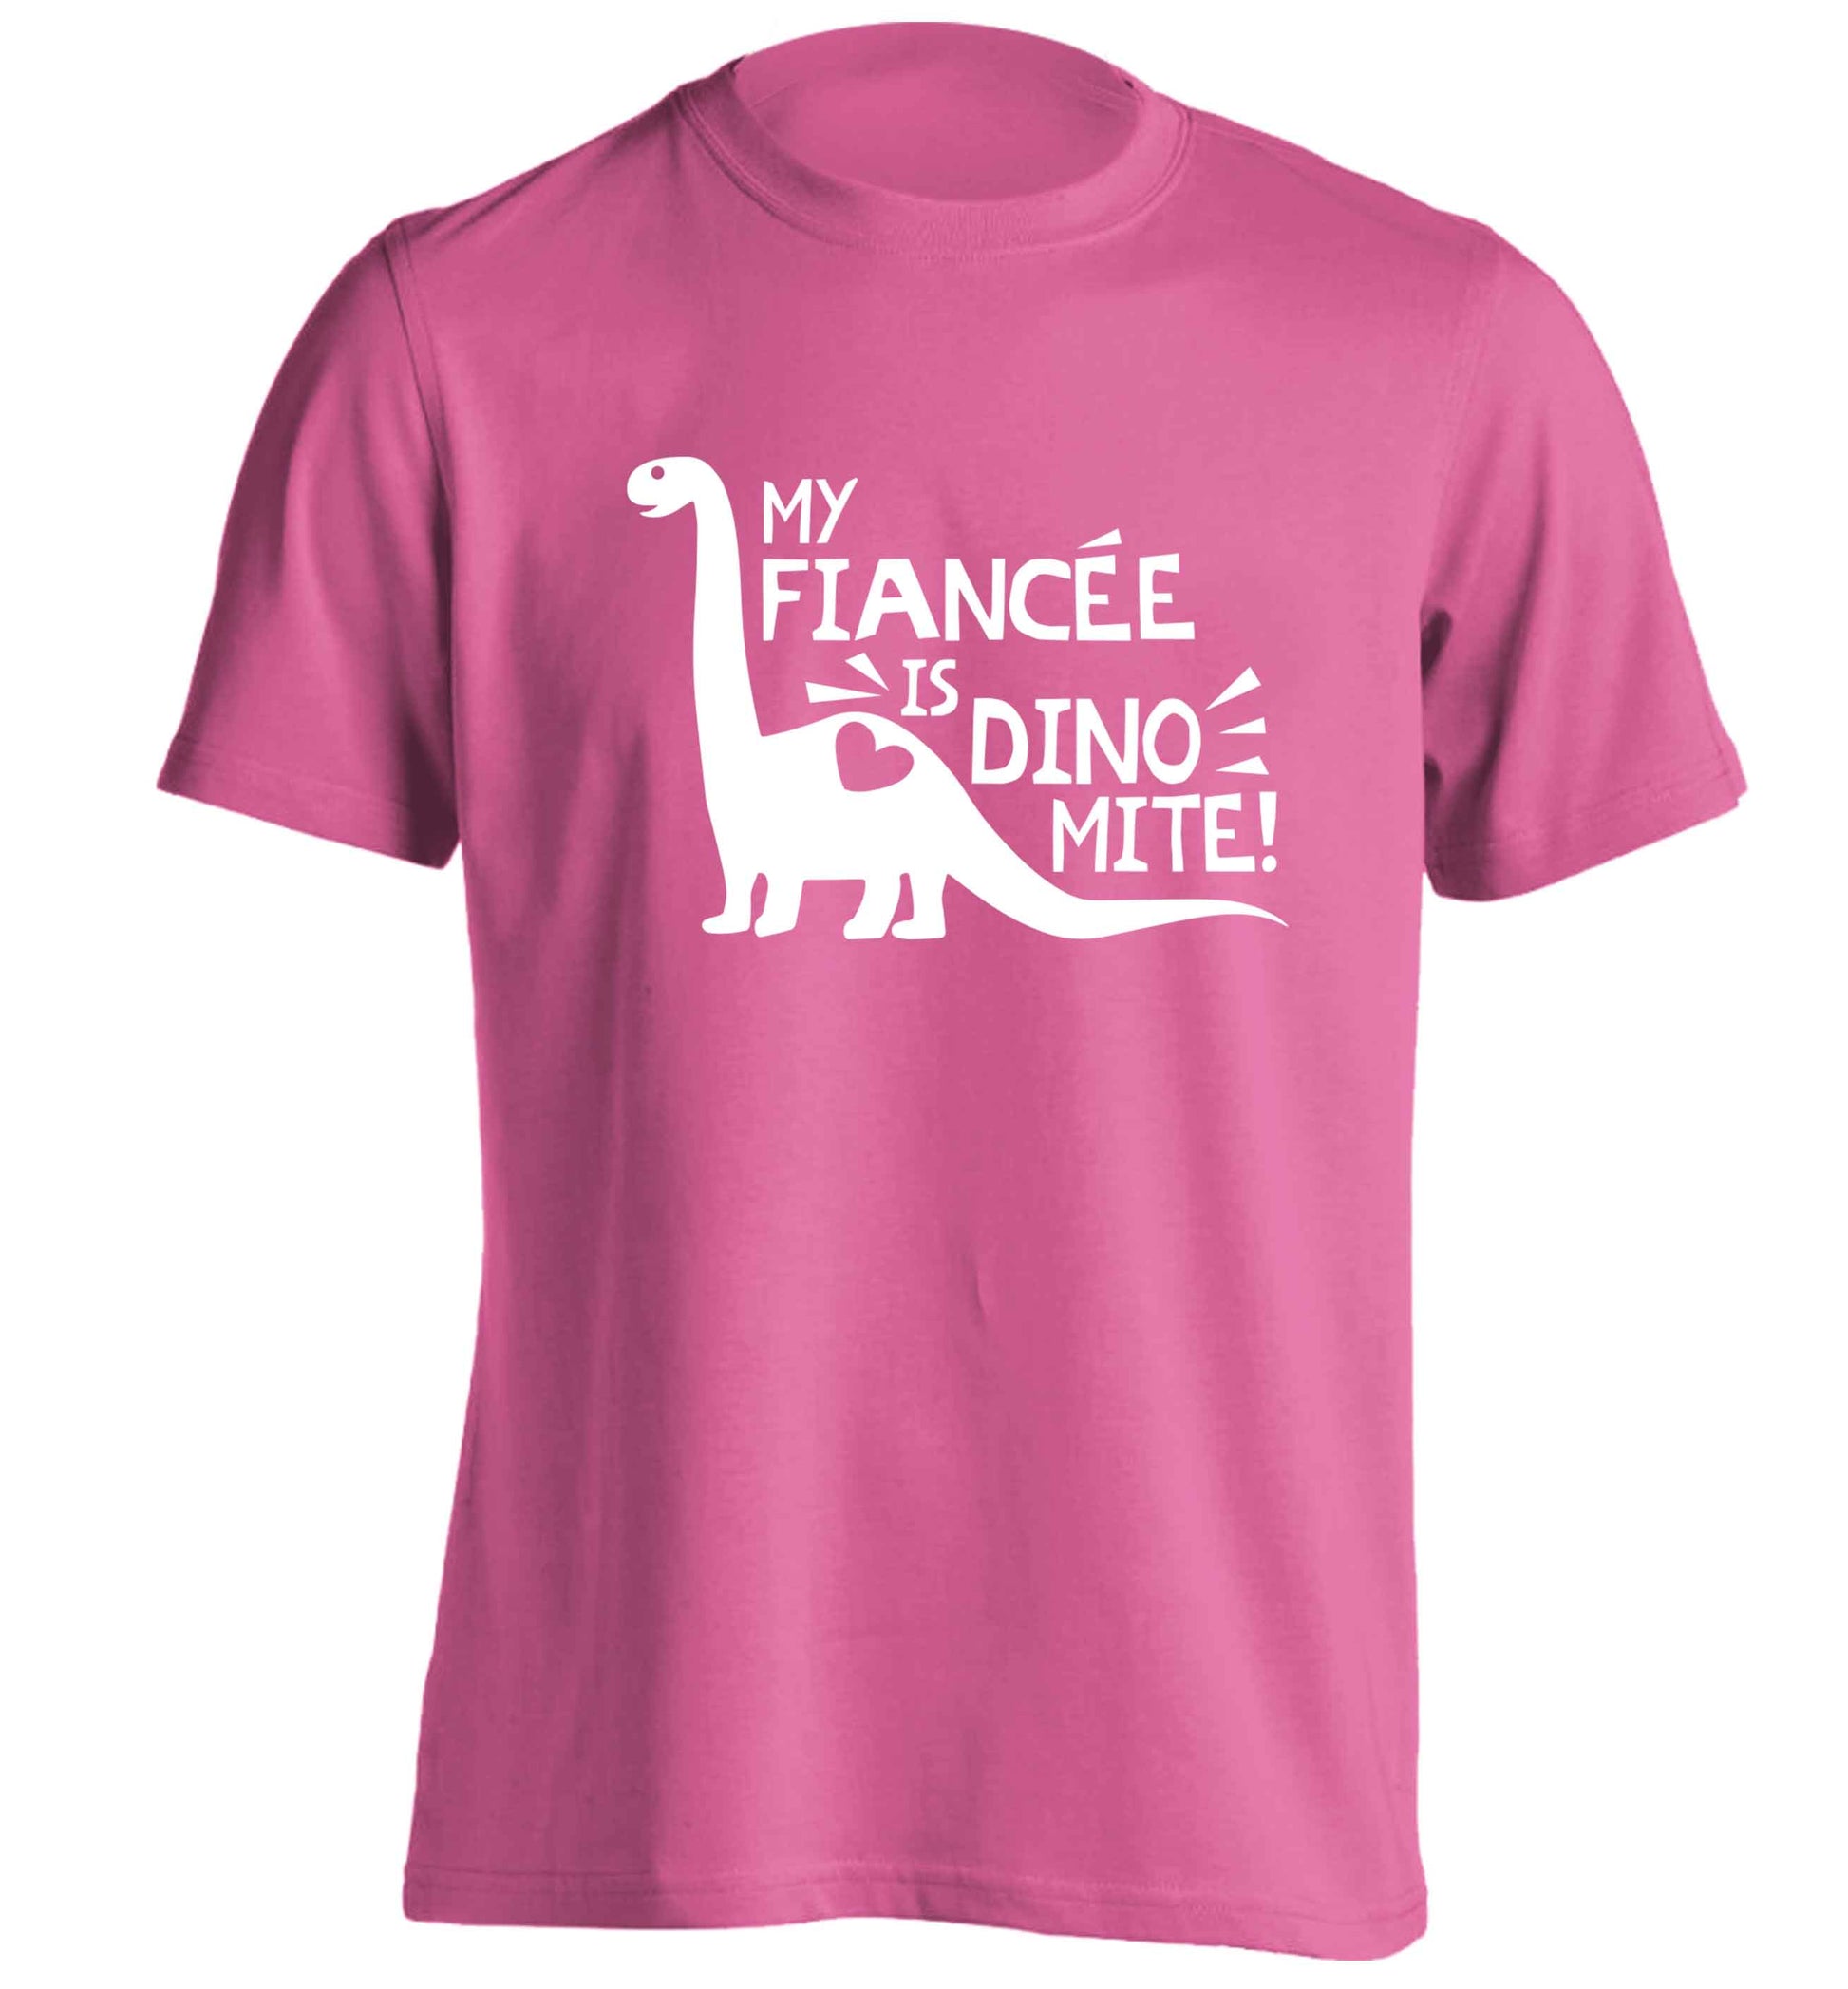 My fiancee is dinomite! adults unisex pink Tshirt 2XL